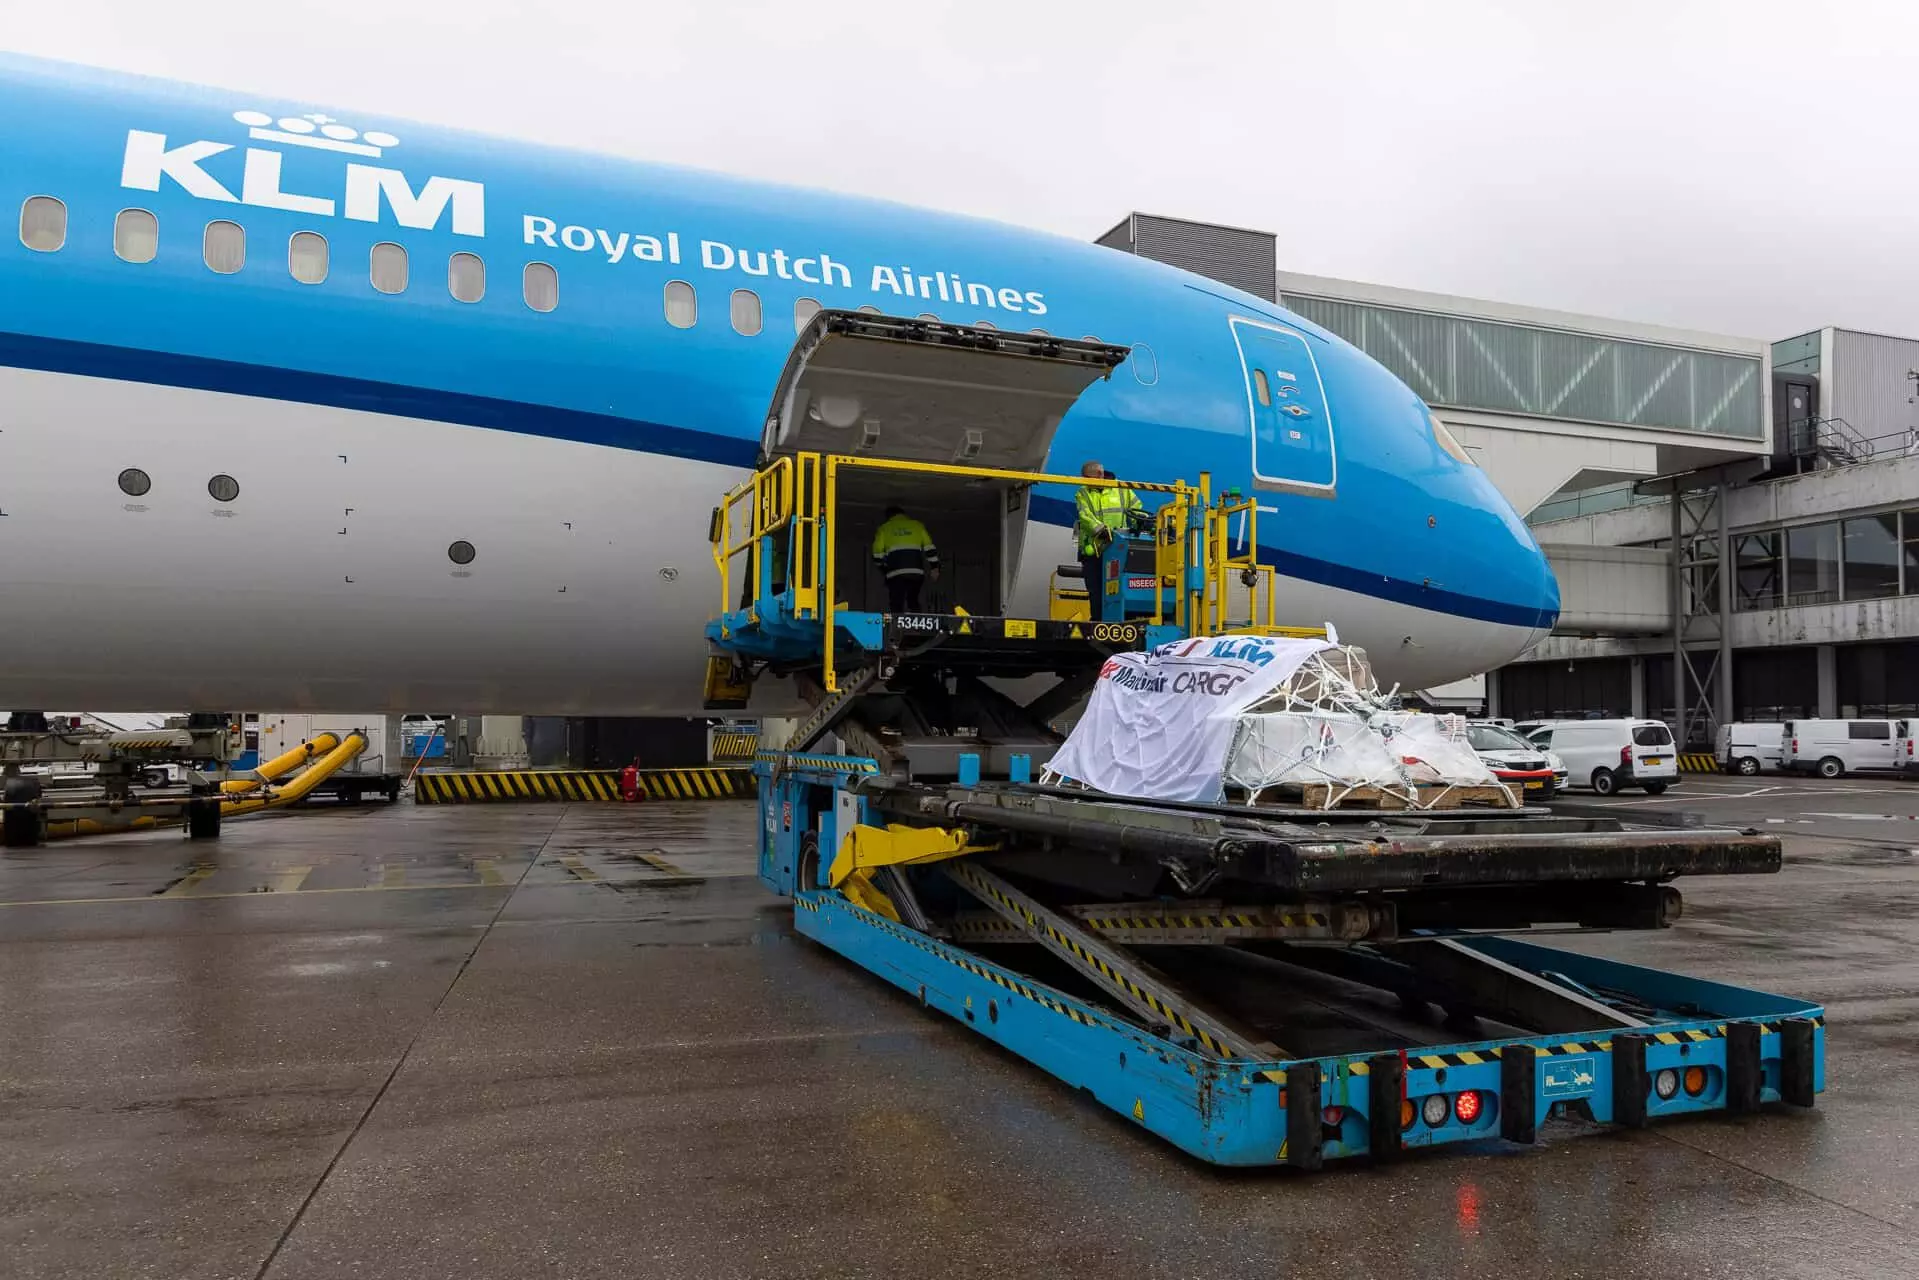 AFKLM Martinair Cargo transports koalas to the Netherlands